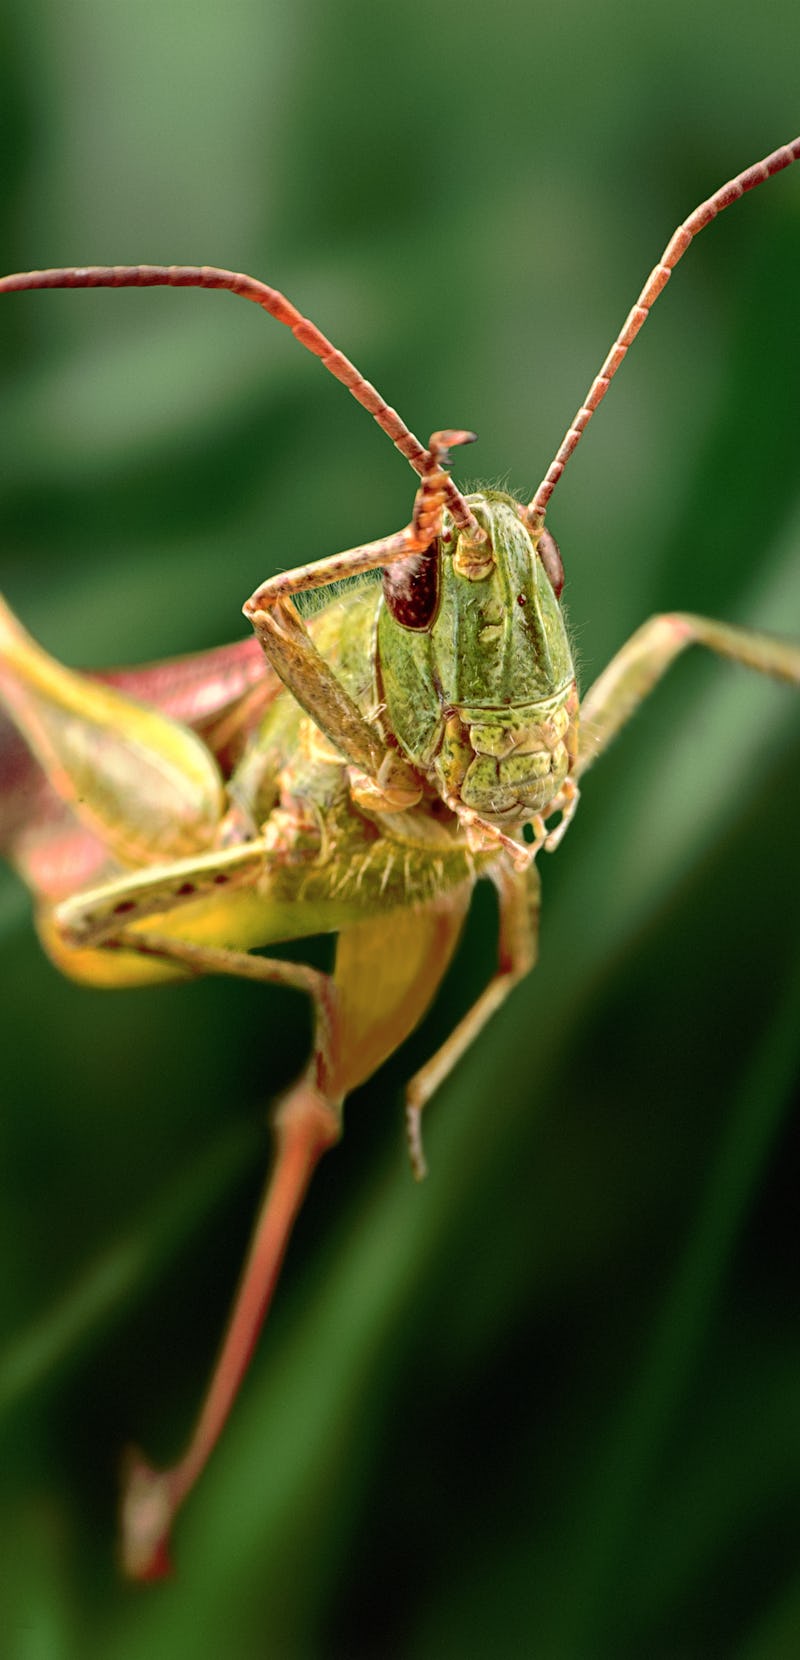 Grasshopper jump close up, insect macro 